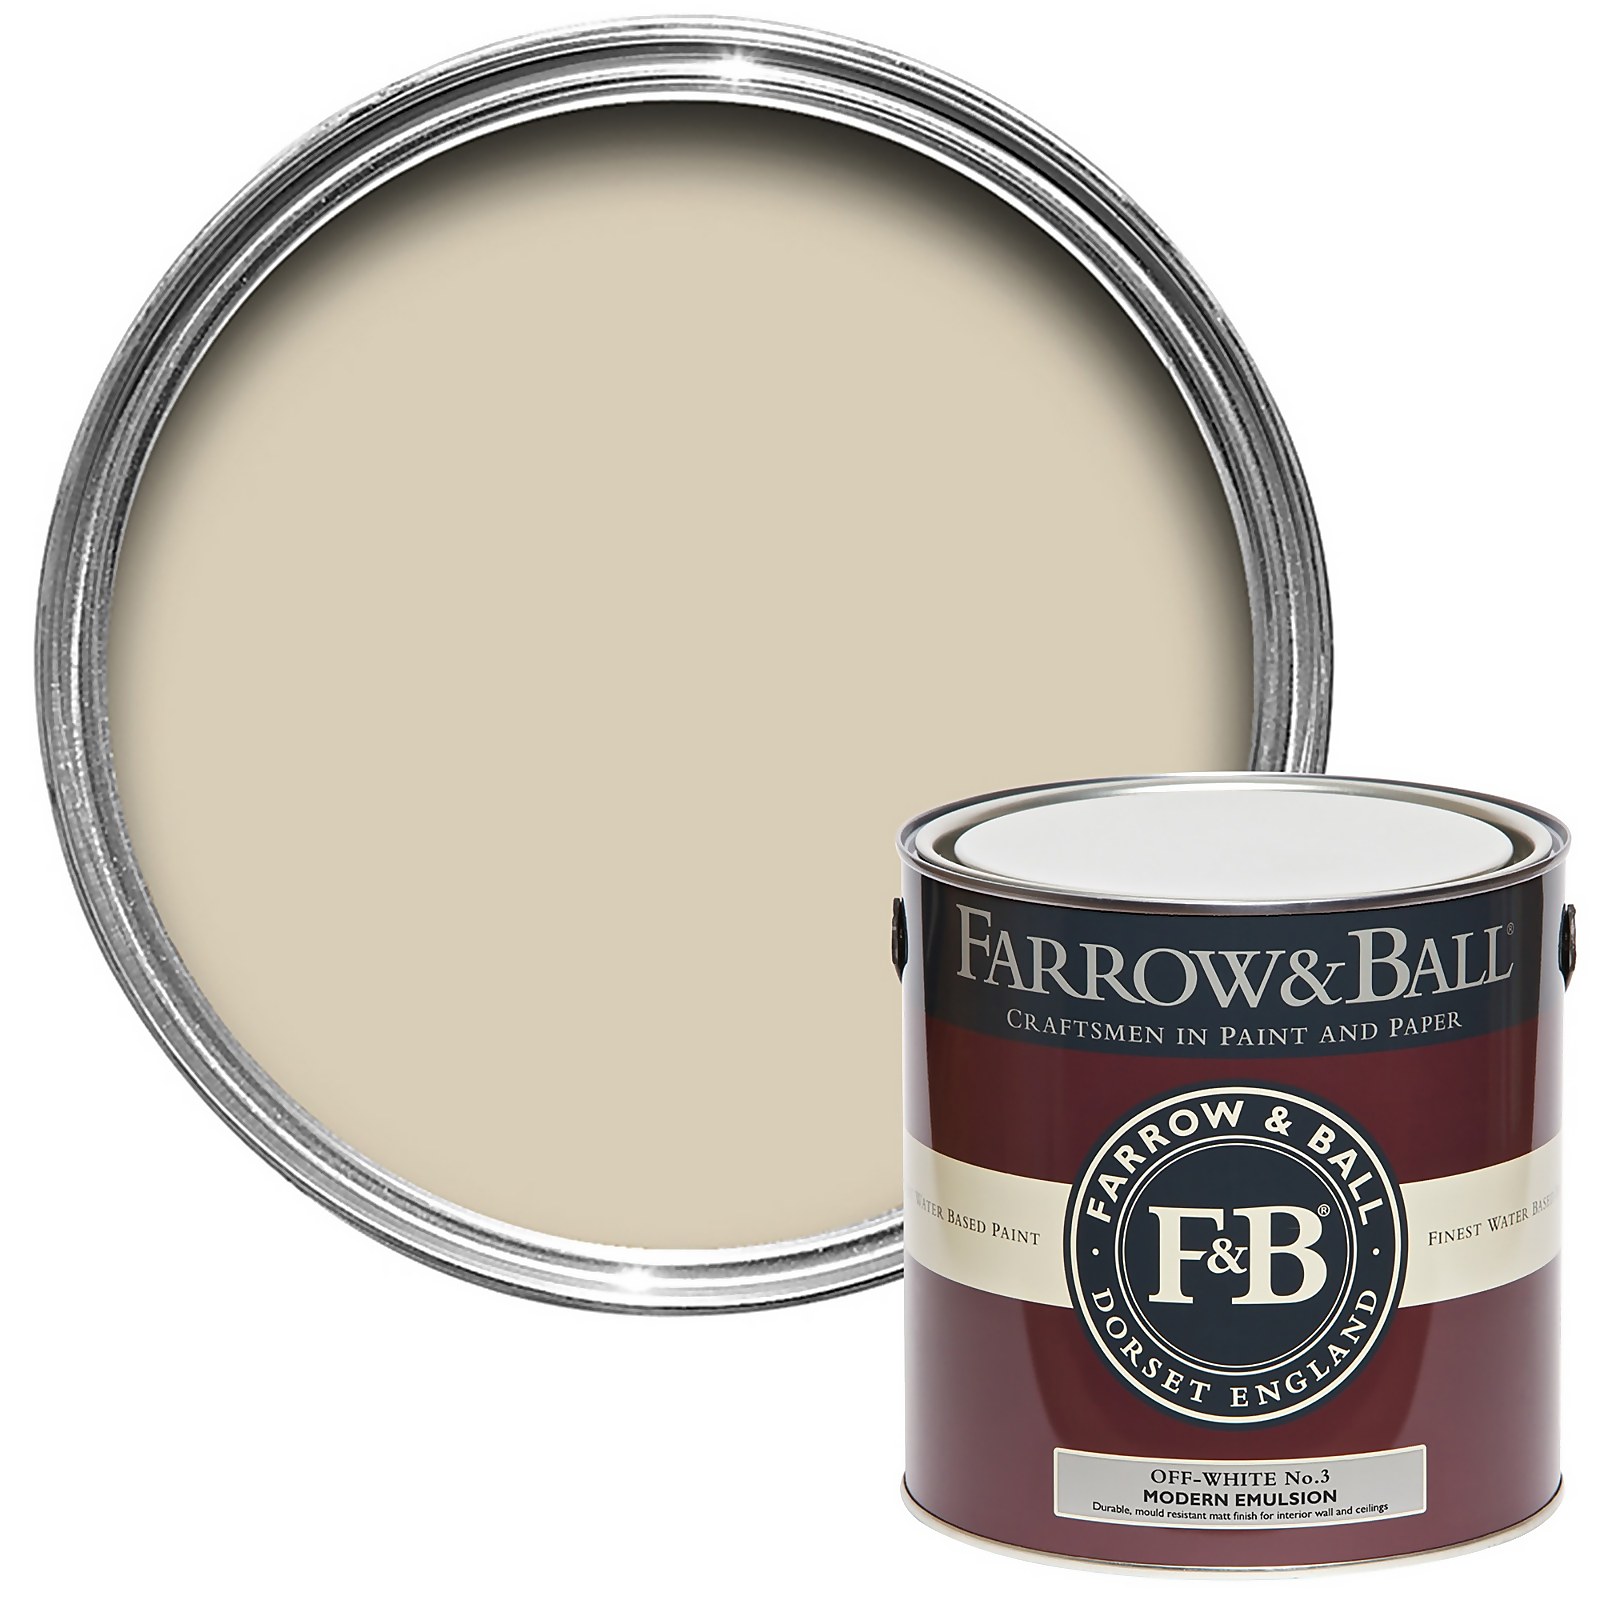 Farrow & Ball Modern Emulsion Paint Off-White No.3 - 2.5L